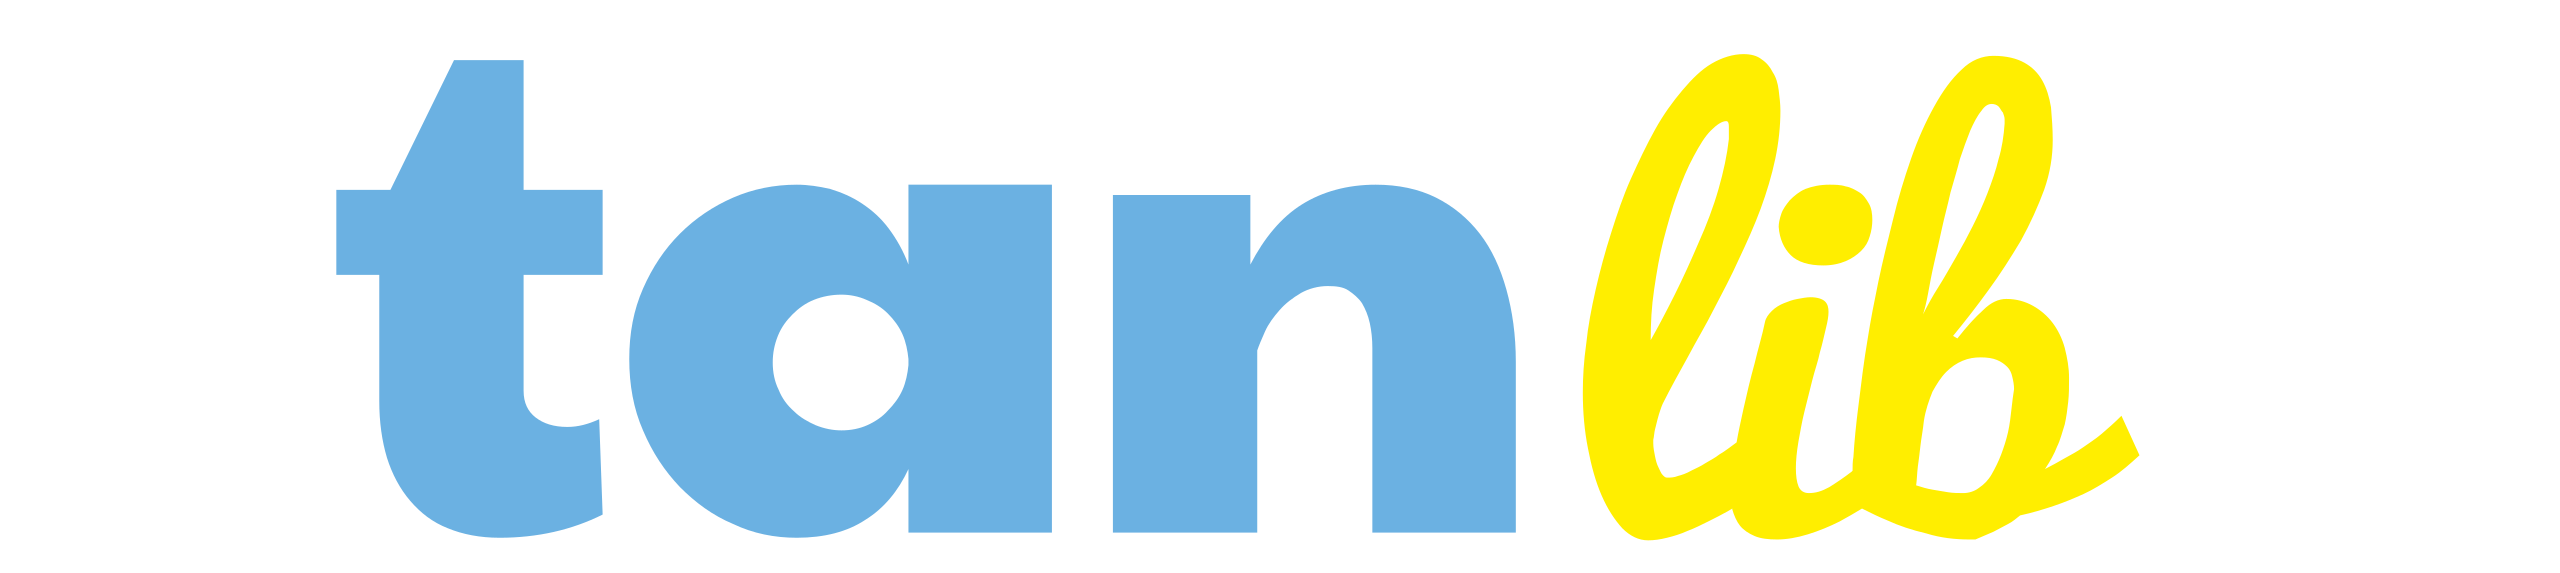 Tanlib logo